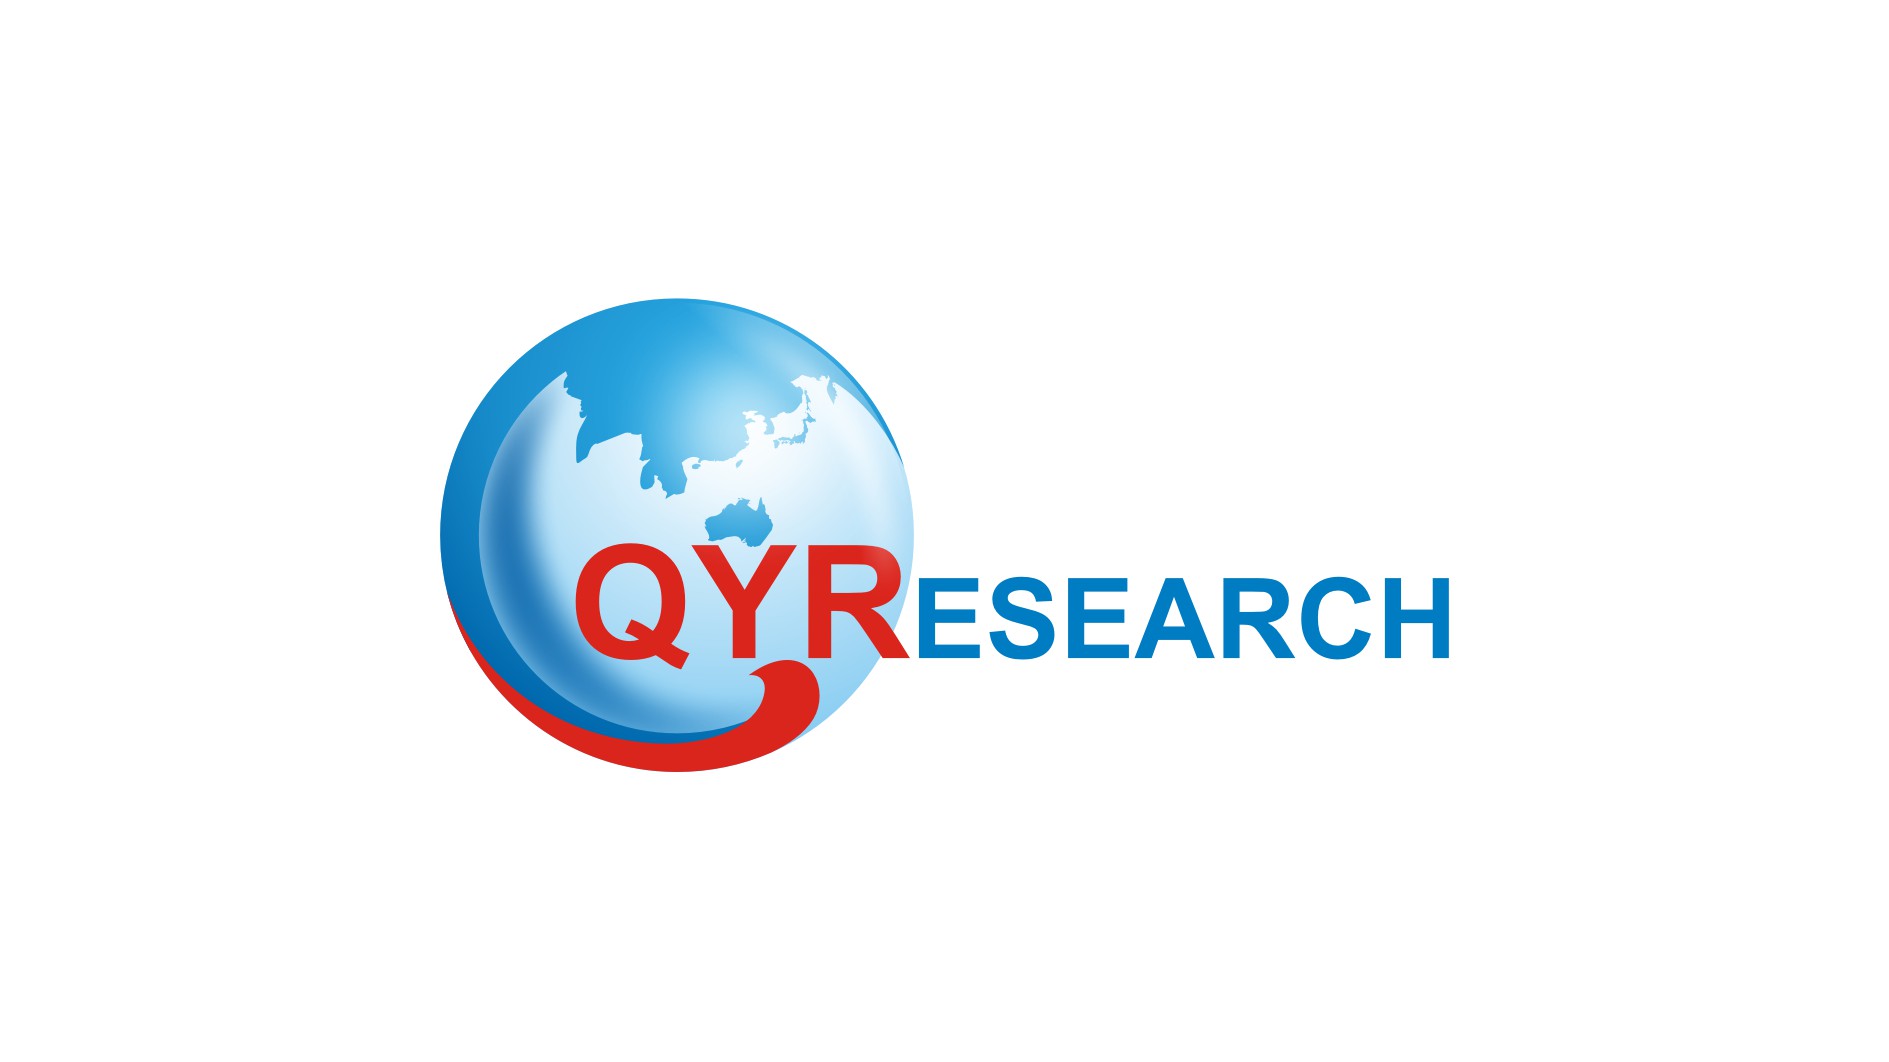 Global Hydrostatic Testing market 2019 – 2025 analysis scrutinized in new research